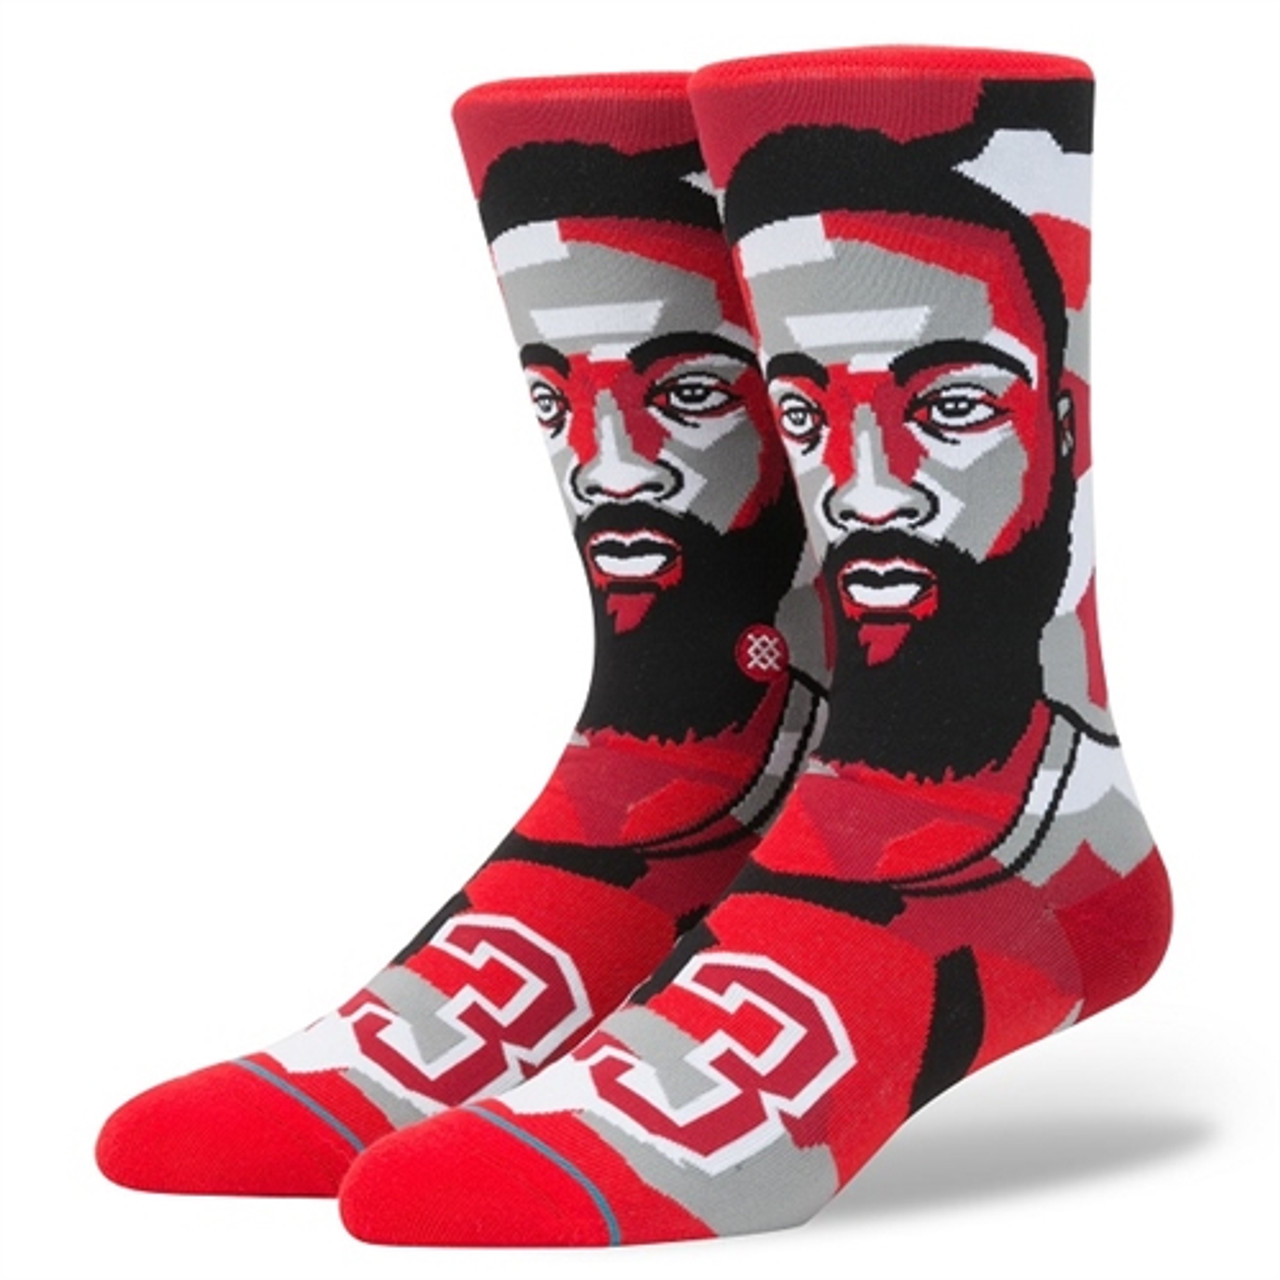 Stance Mosaic Harden NBA Mens Socks Red M (6-8.5)